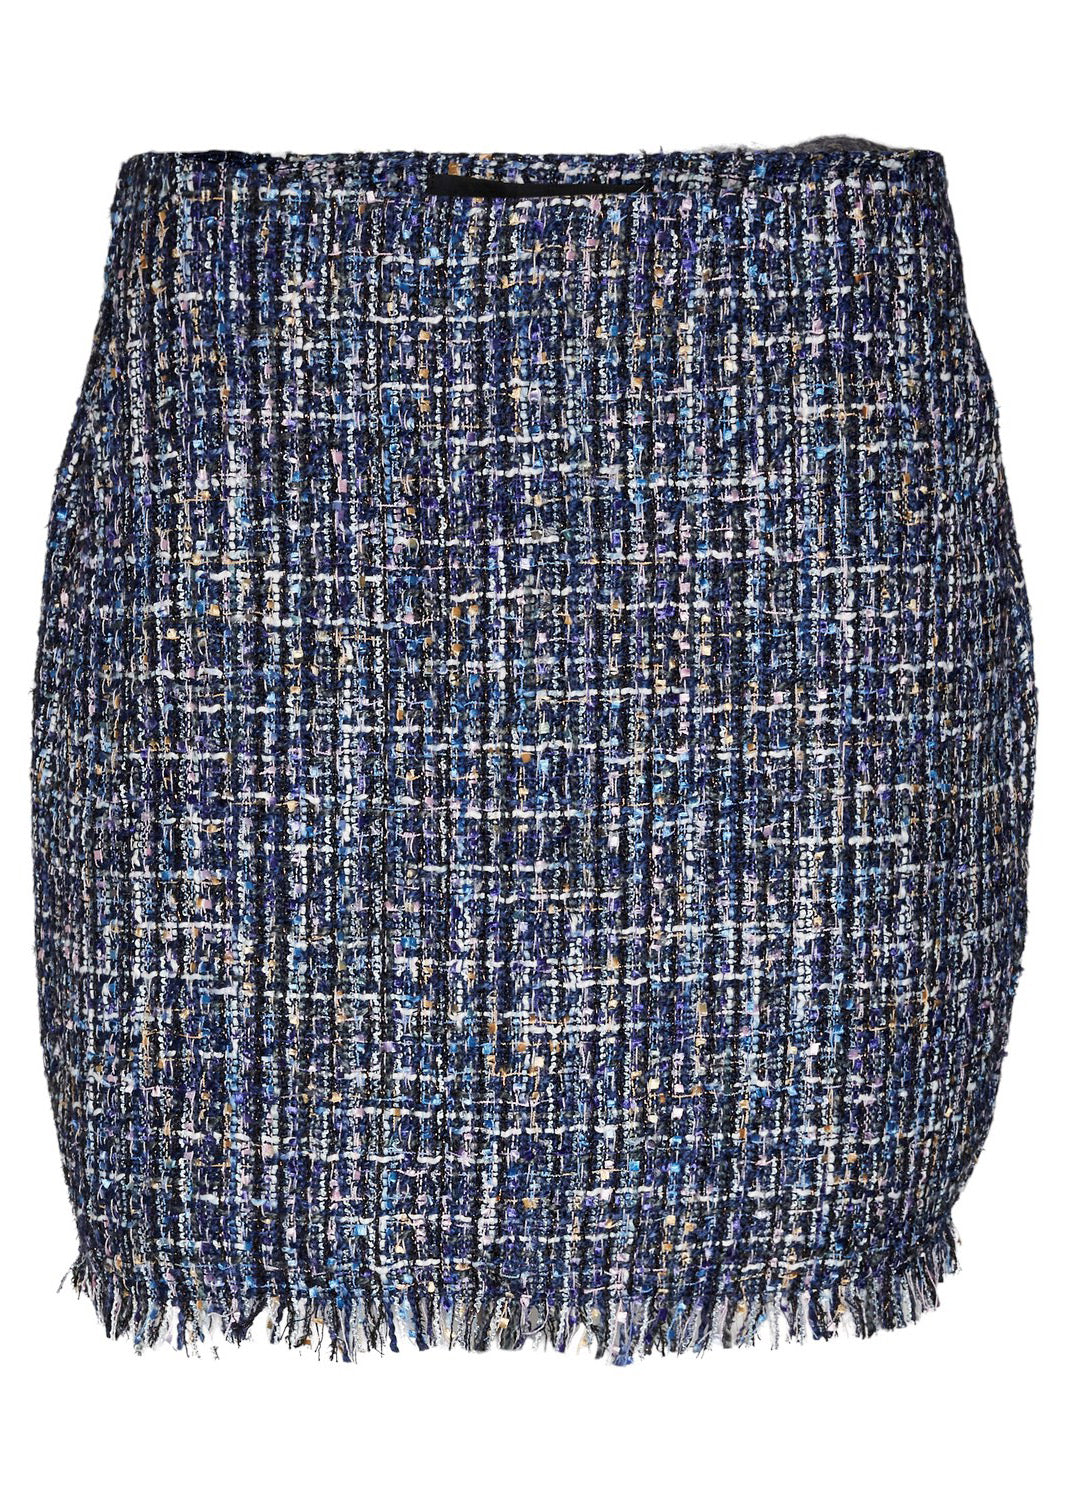 Chantelle Blue Tweed Skirt